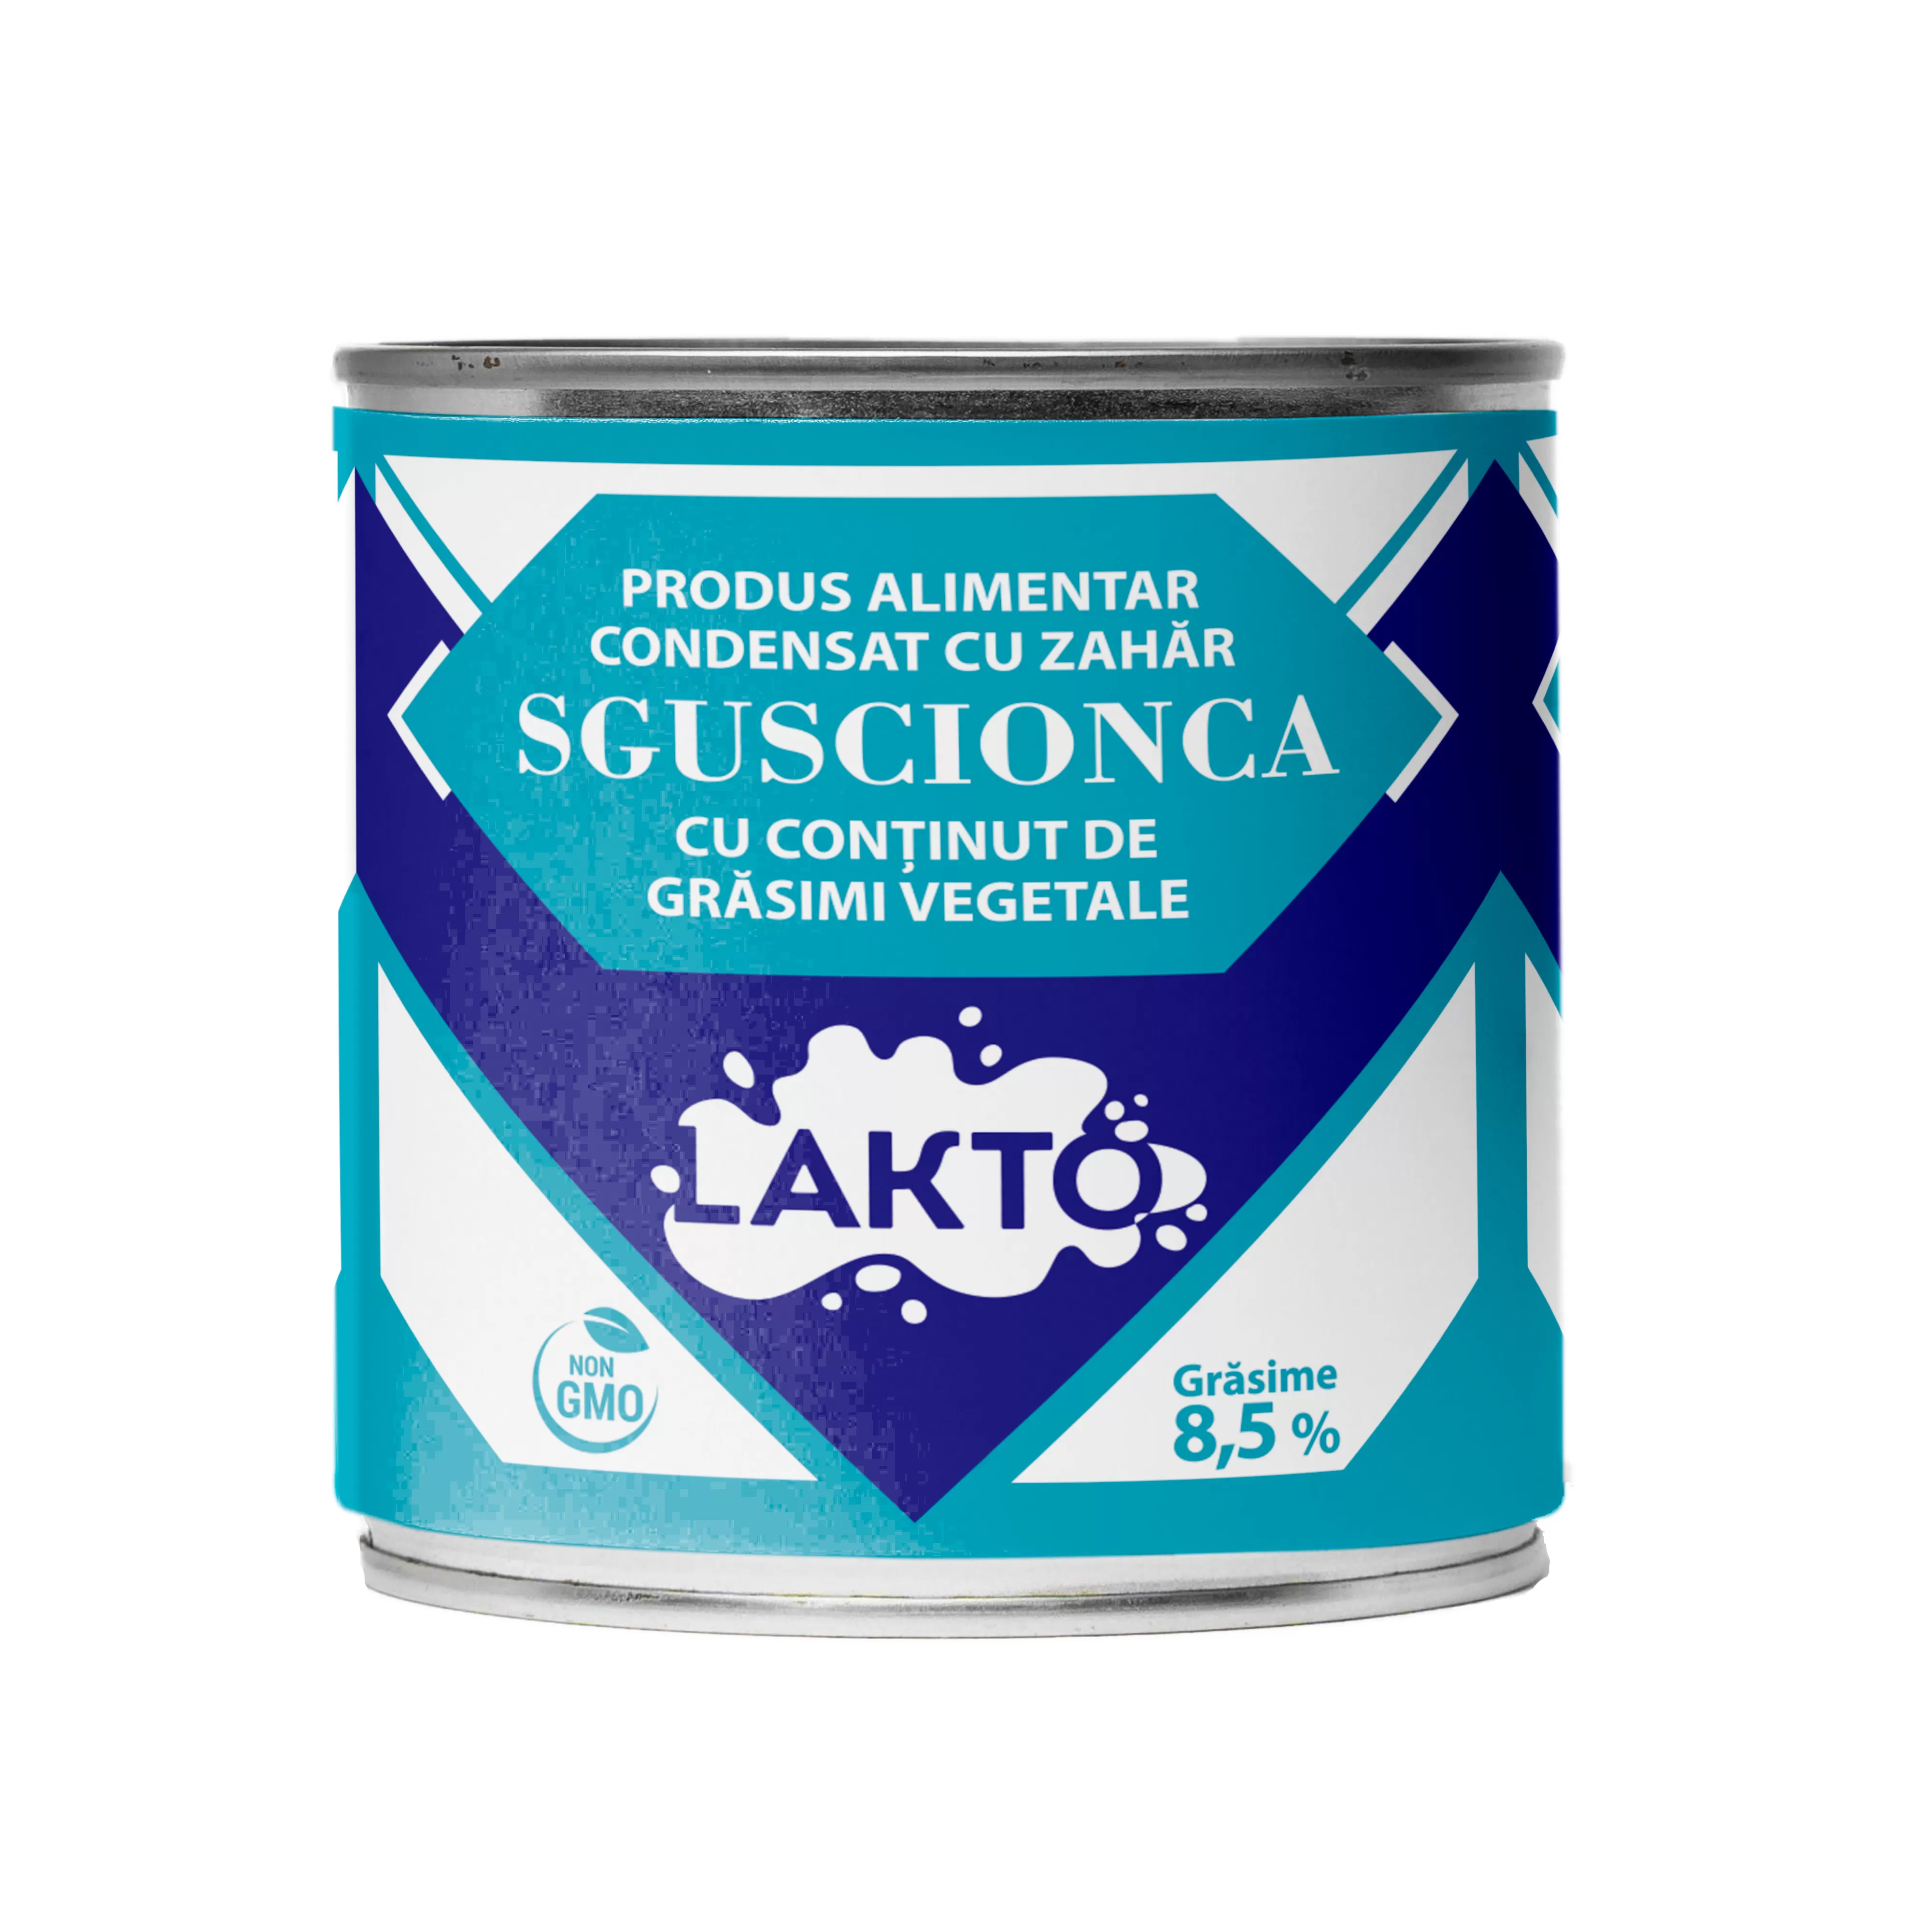 LAKTO Produs alimentar condensat cu zahăr Sguscionca 8,5%, 370g